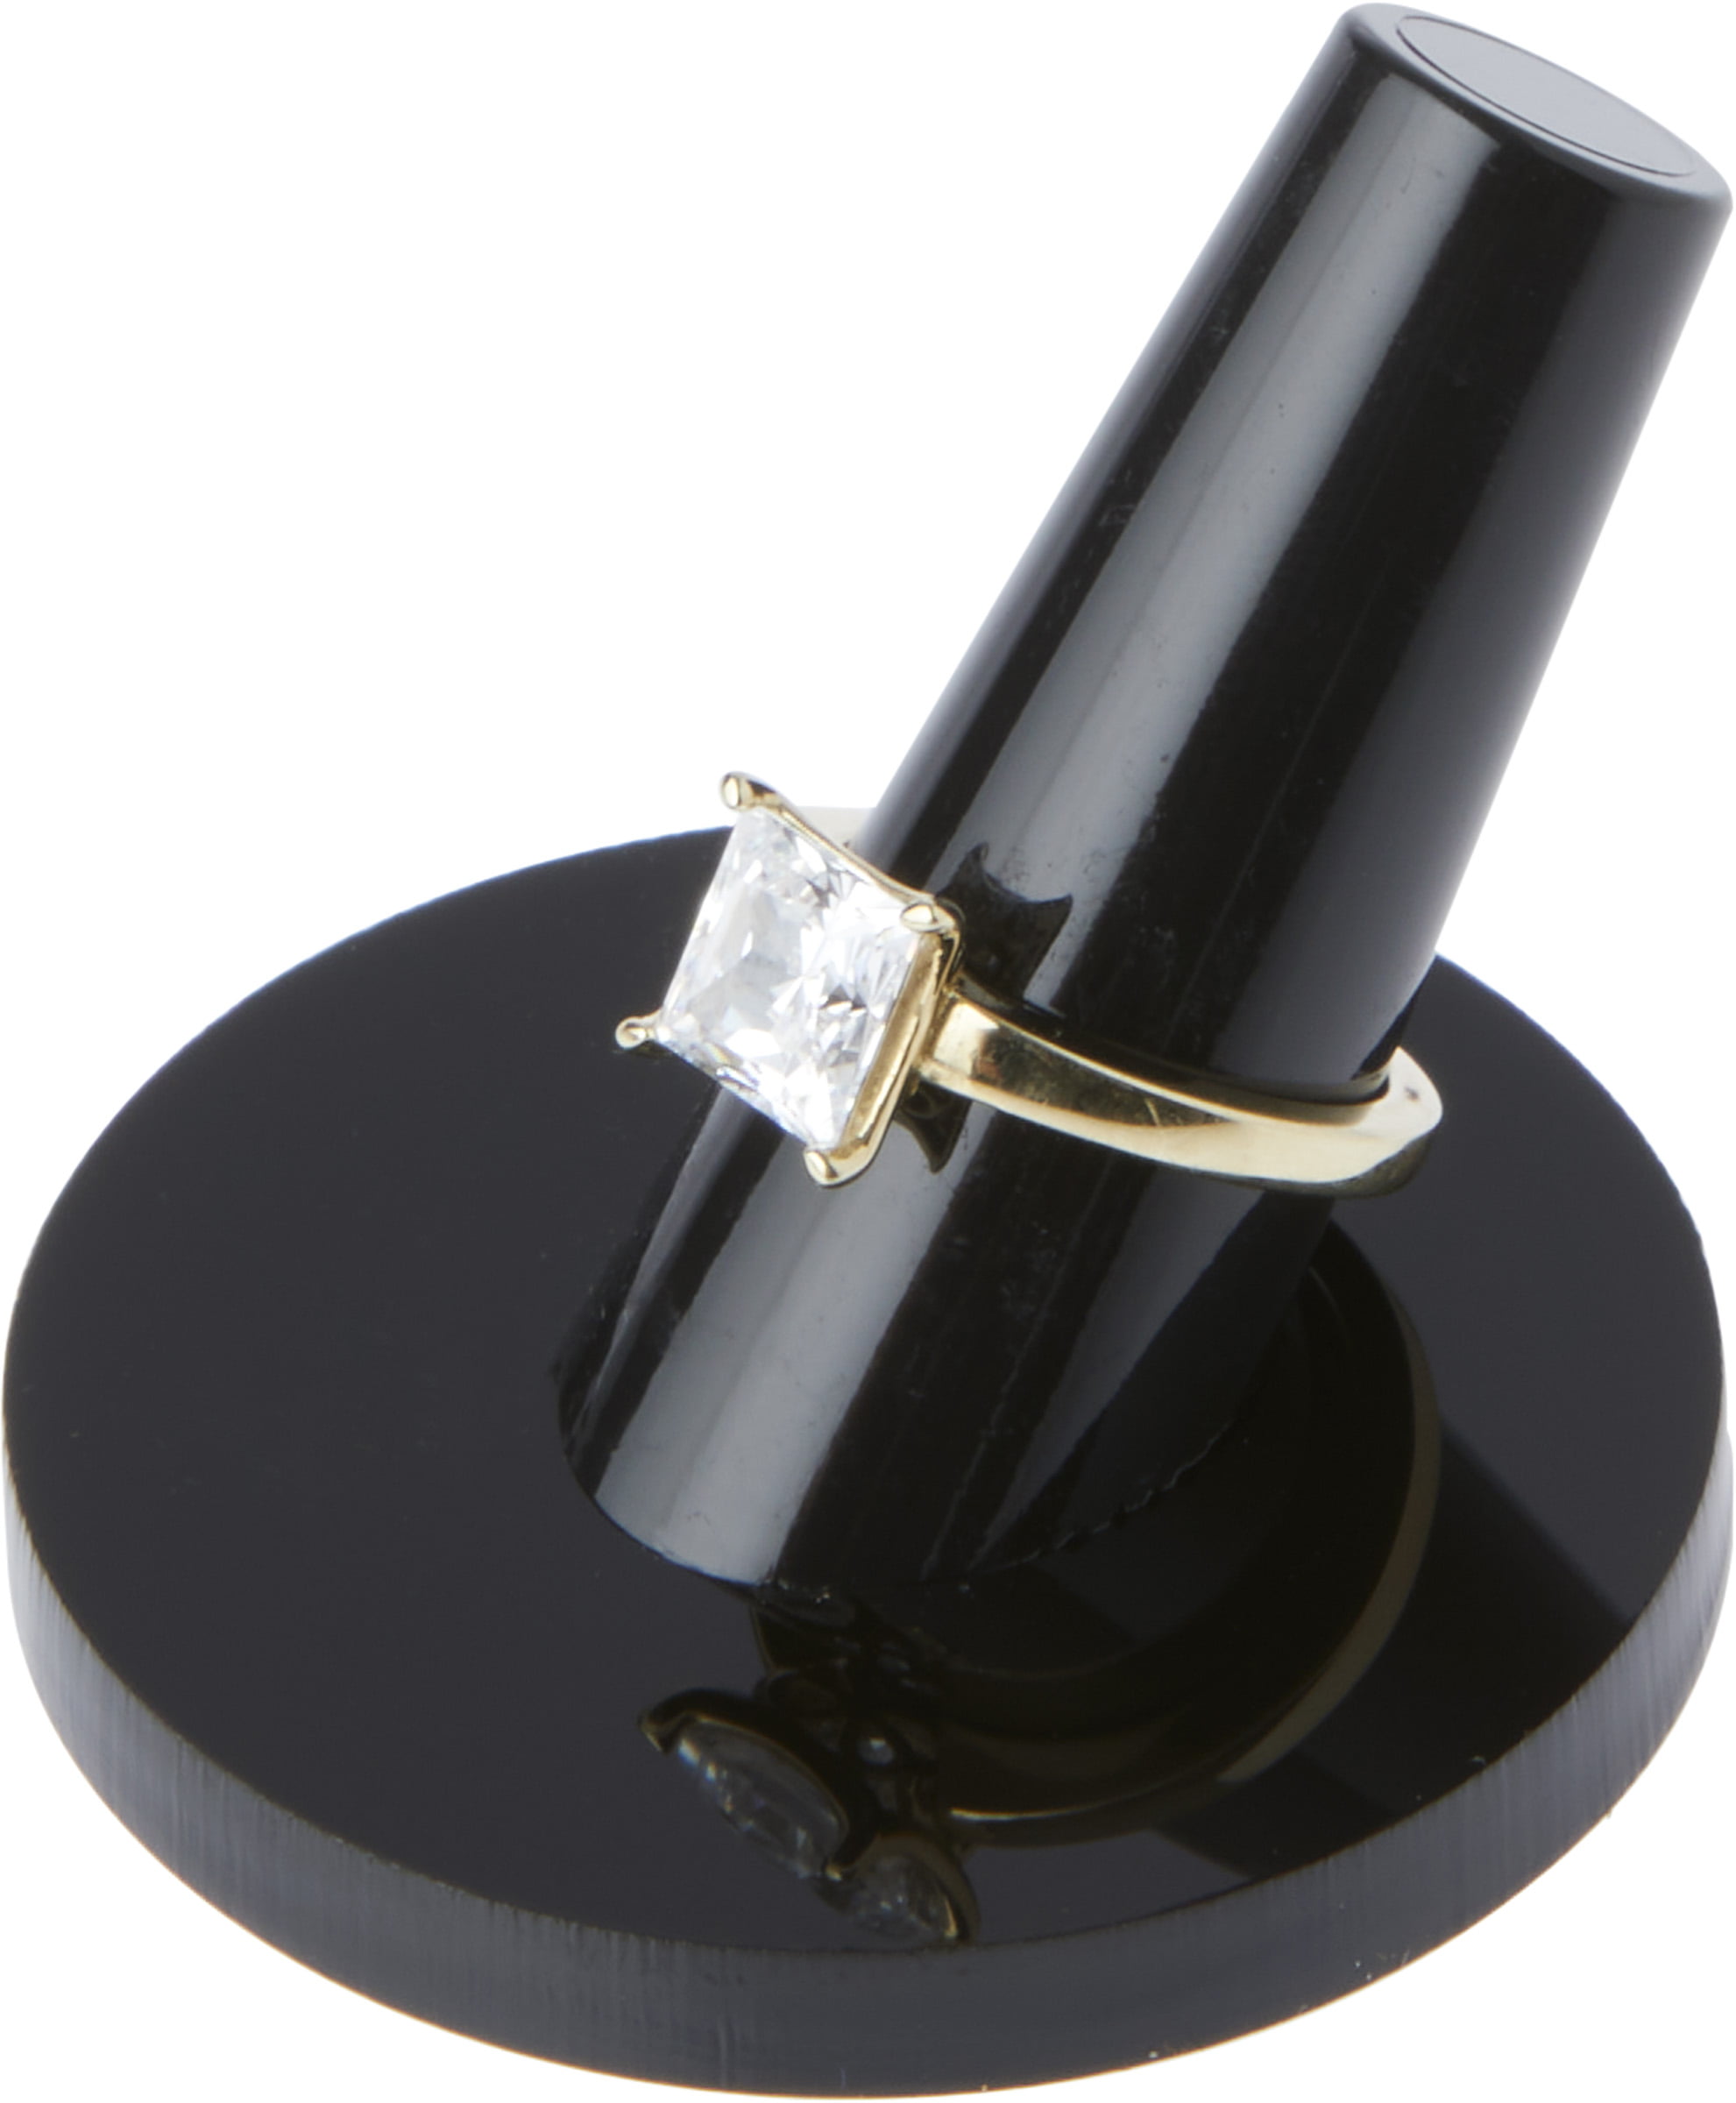 2"W x 2"D x 1.75"H Plymor Black Acrylic Ring Display Single on Round base 